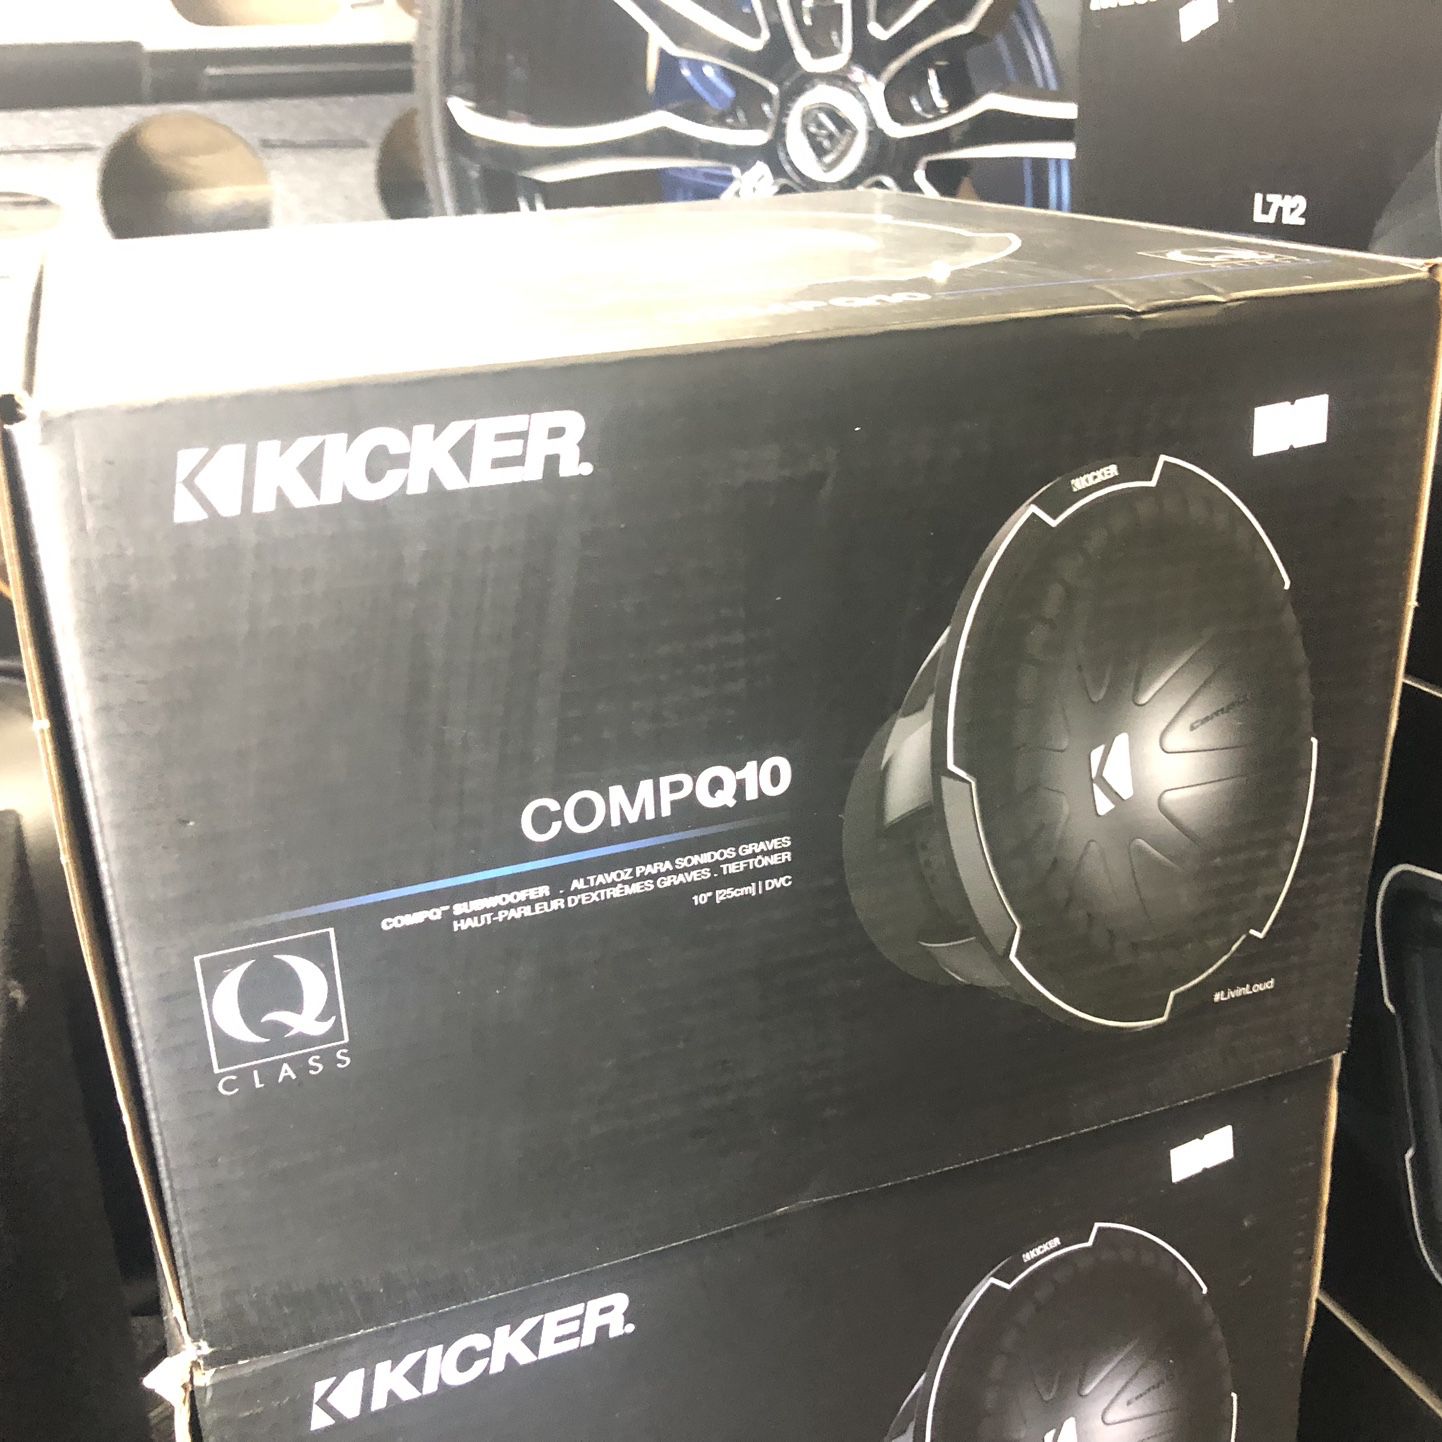 Kicker CompQ 10 On Sale For 229.99